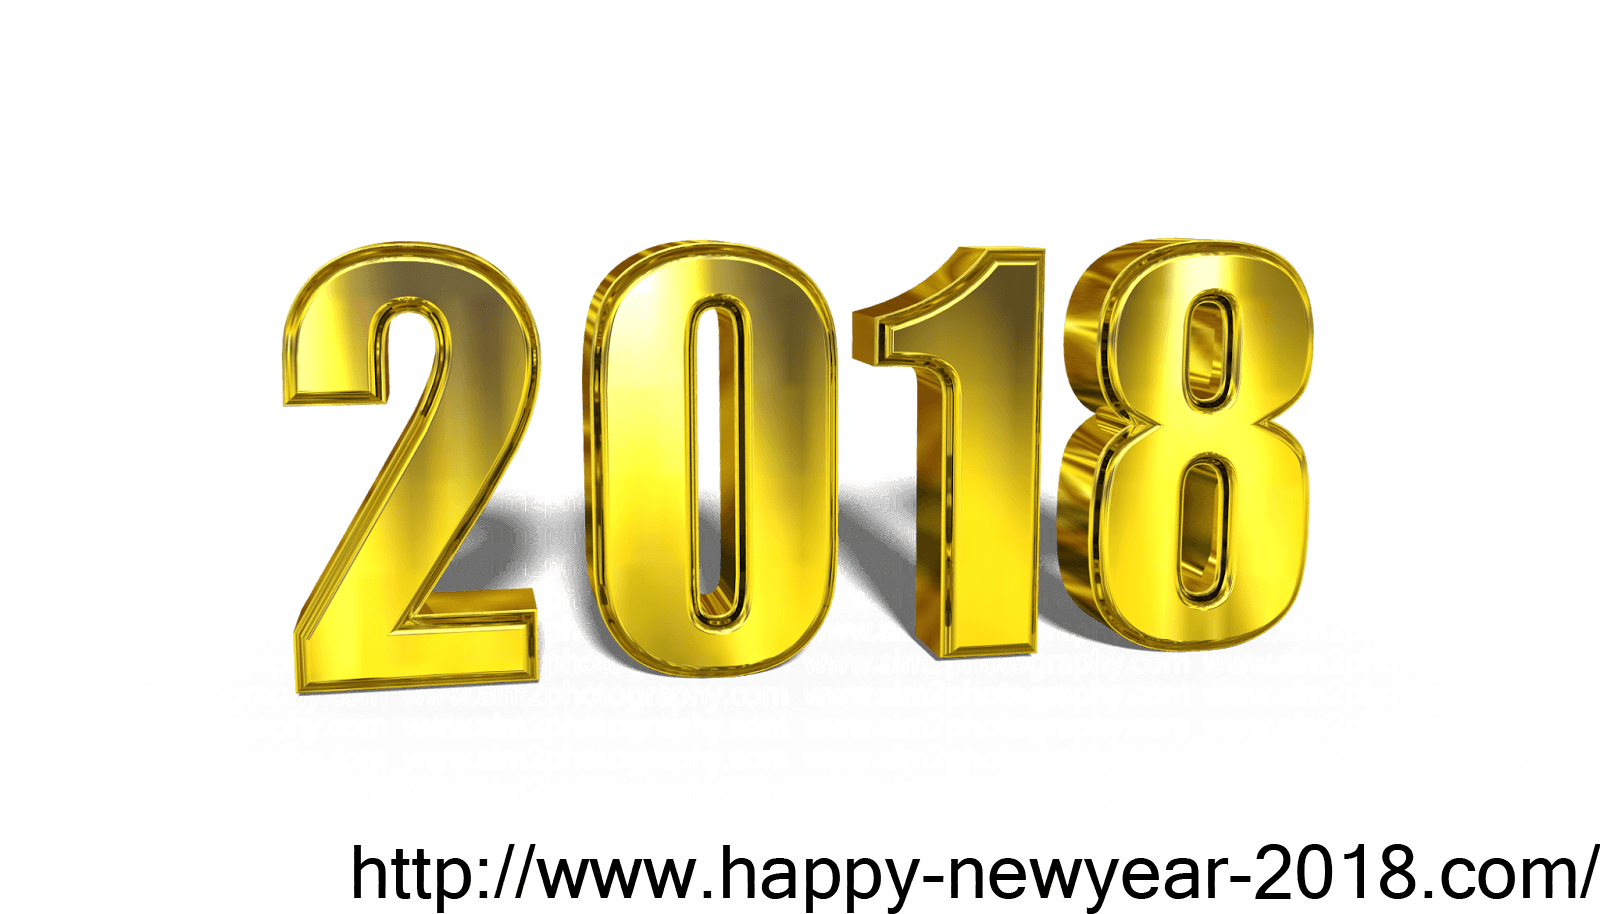 New Year 2018 Logo - calendarcraft. New Year 2018 Wishes Image 995